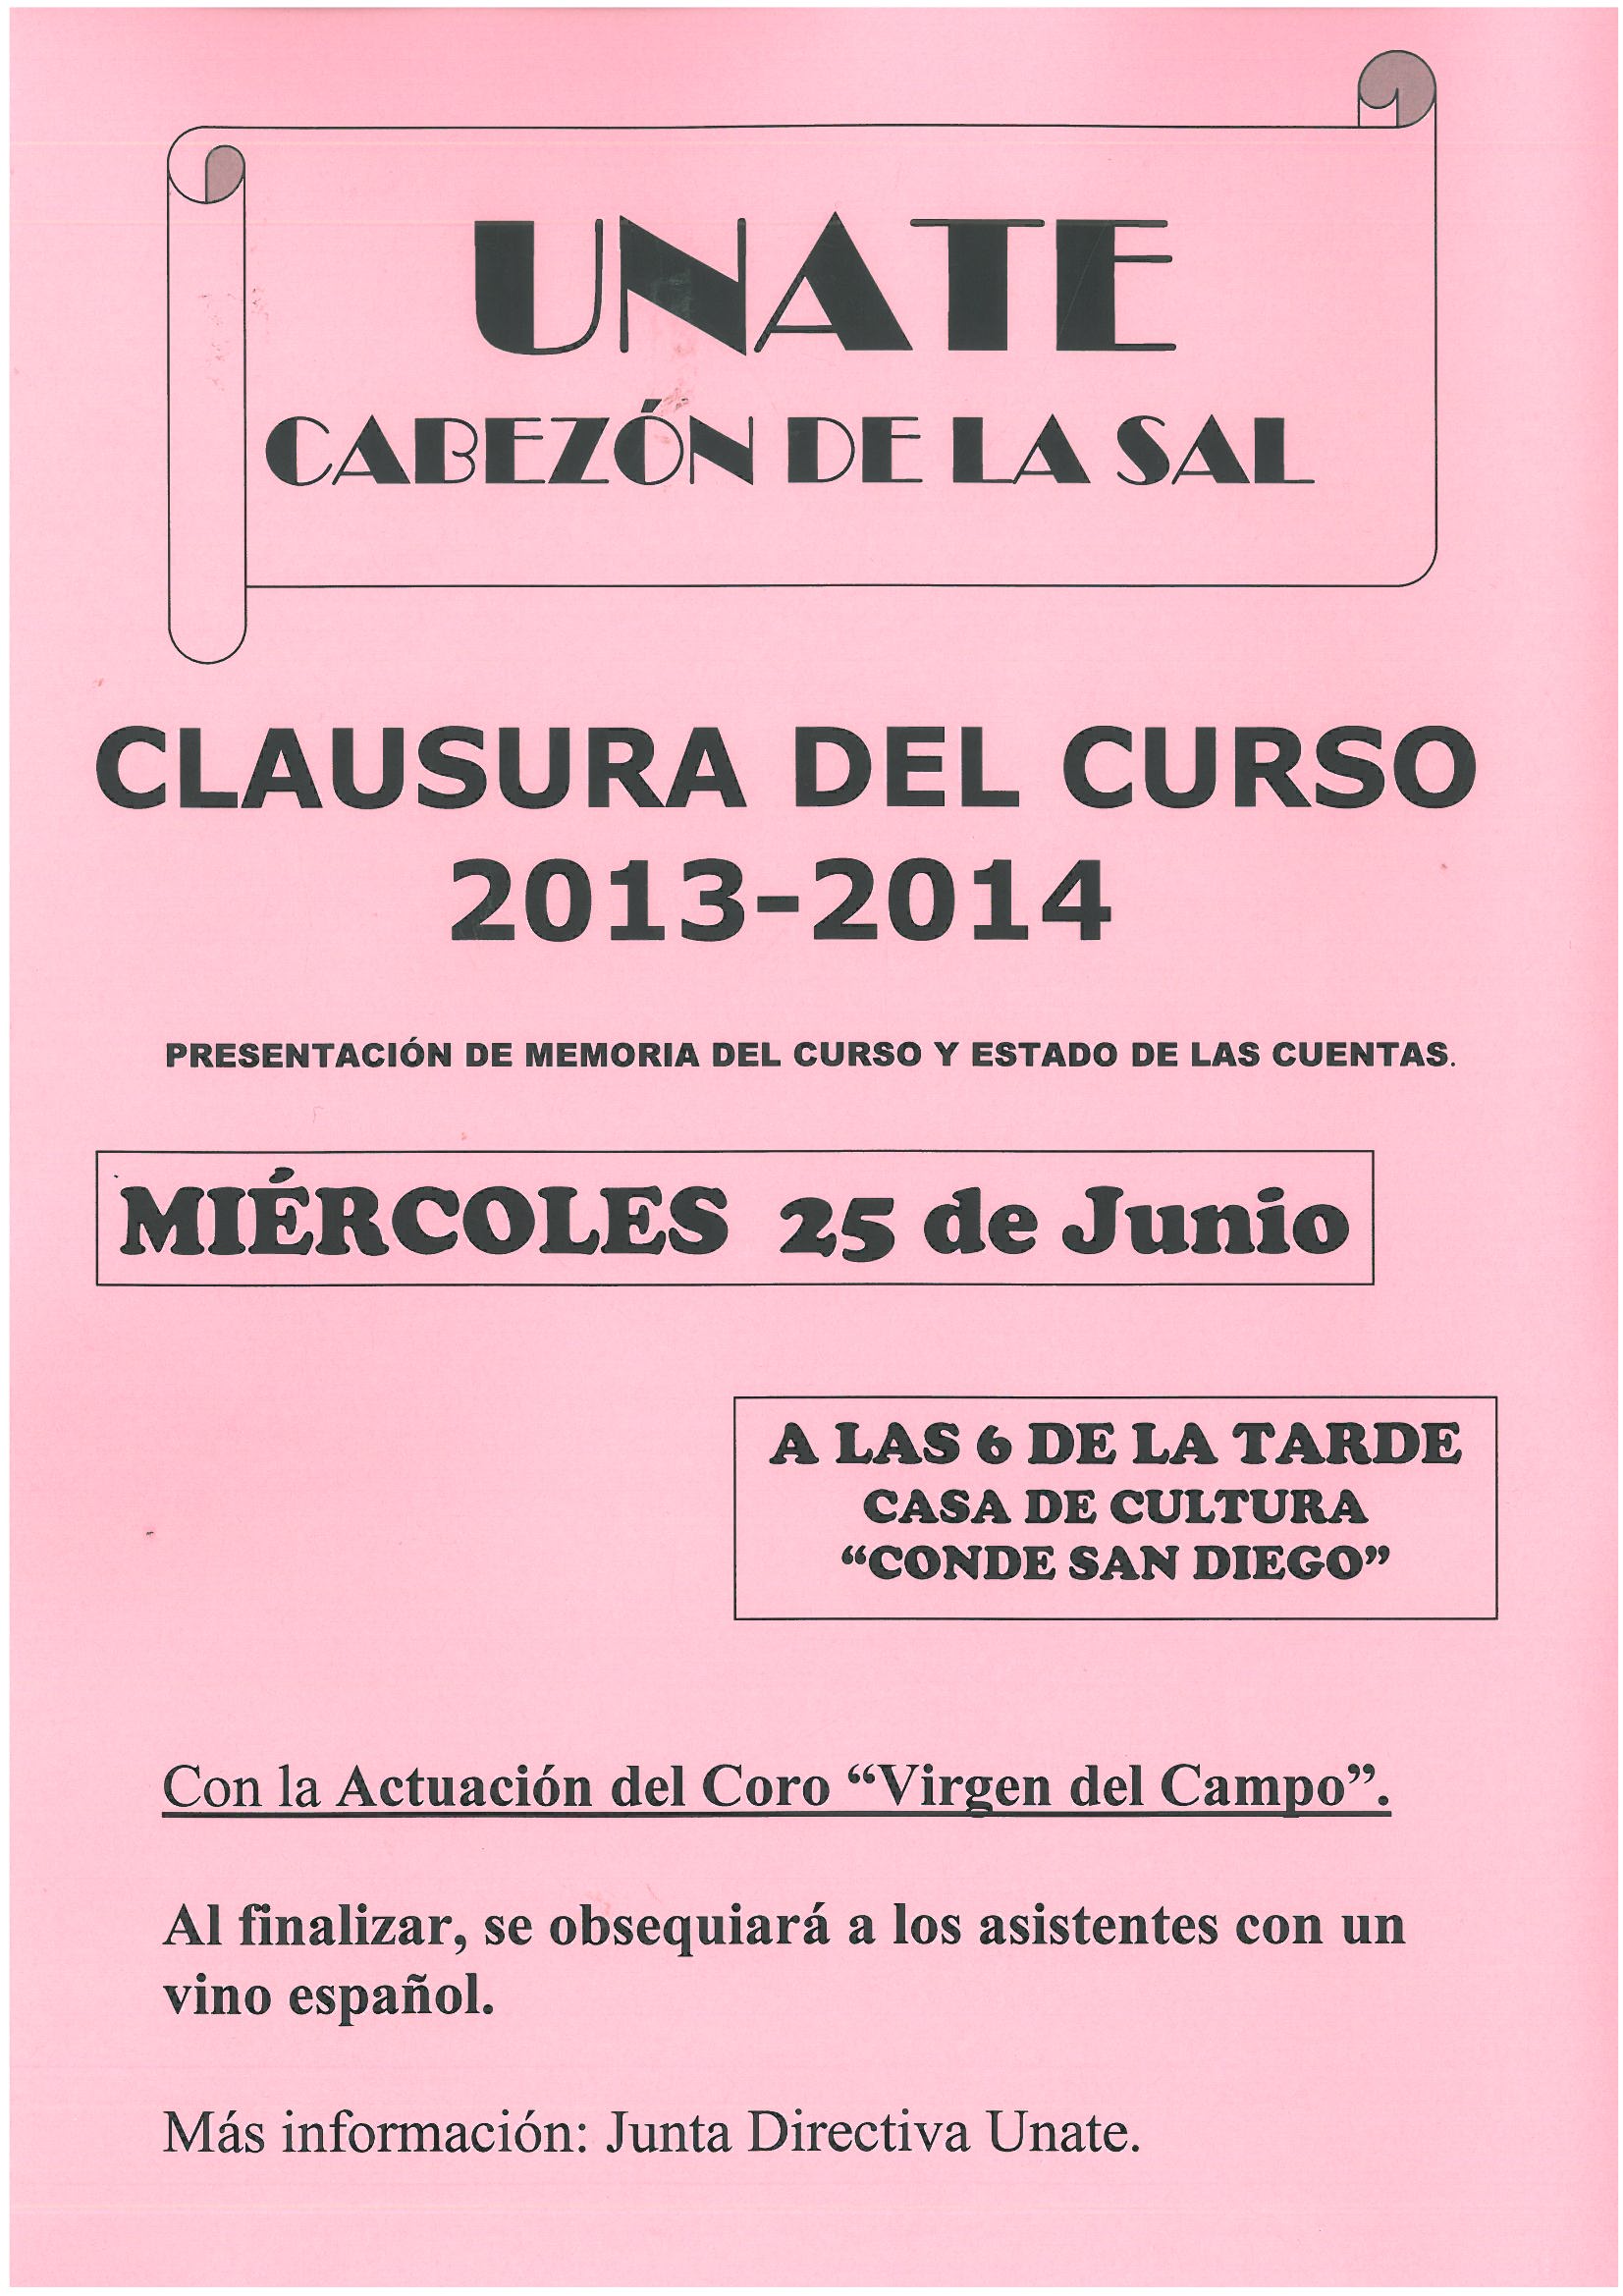 http://www.cabezondelasal.net/wp-content/uploads/2014/06/Cartel-clausura-curso-Unate-junio-2014.jpg